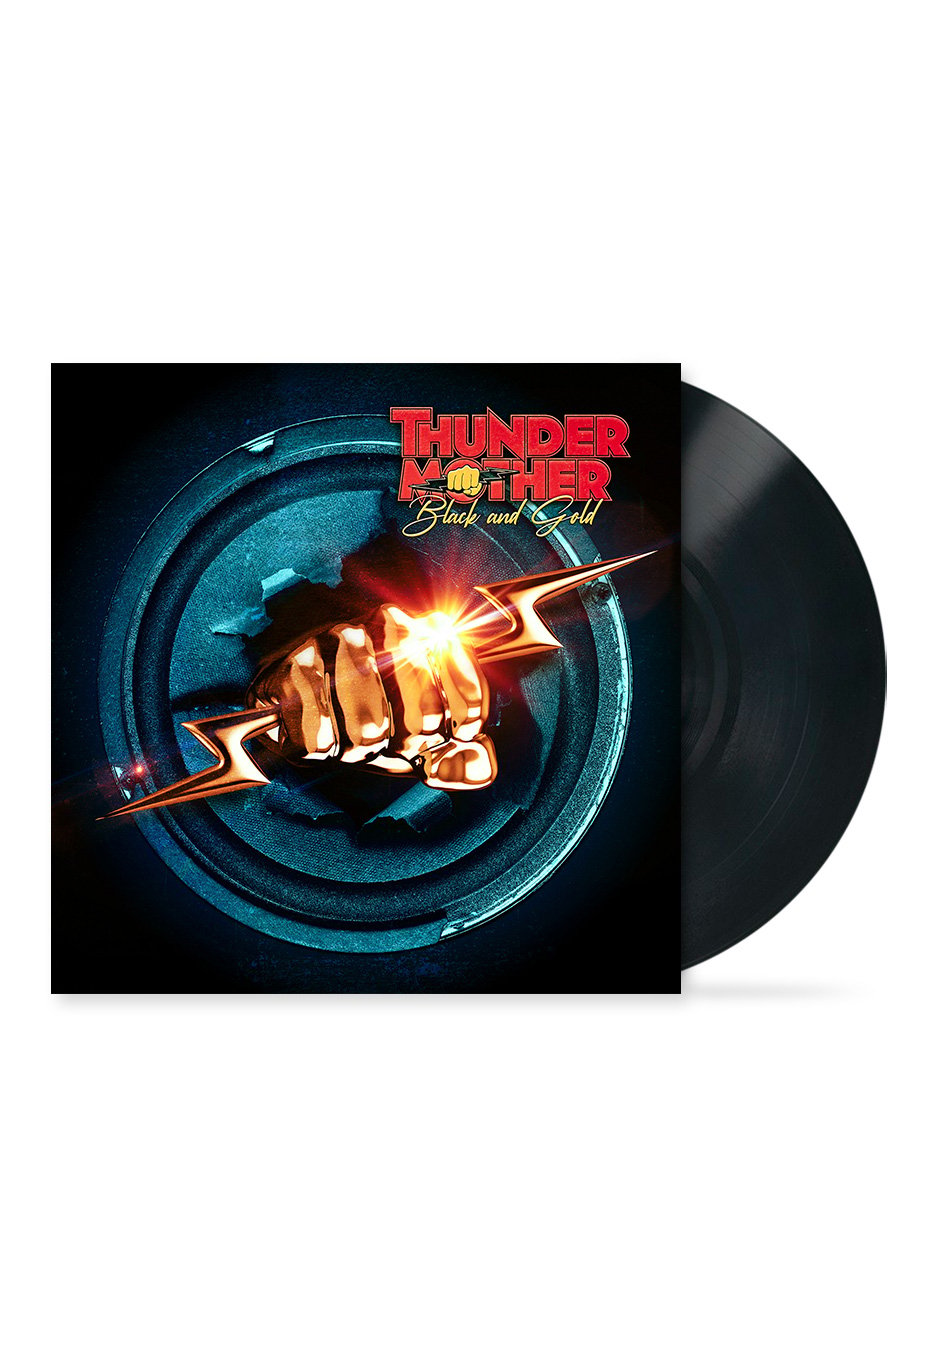 Thundermother - Black And Gold Ltd. - Vinyl